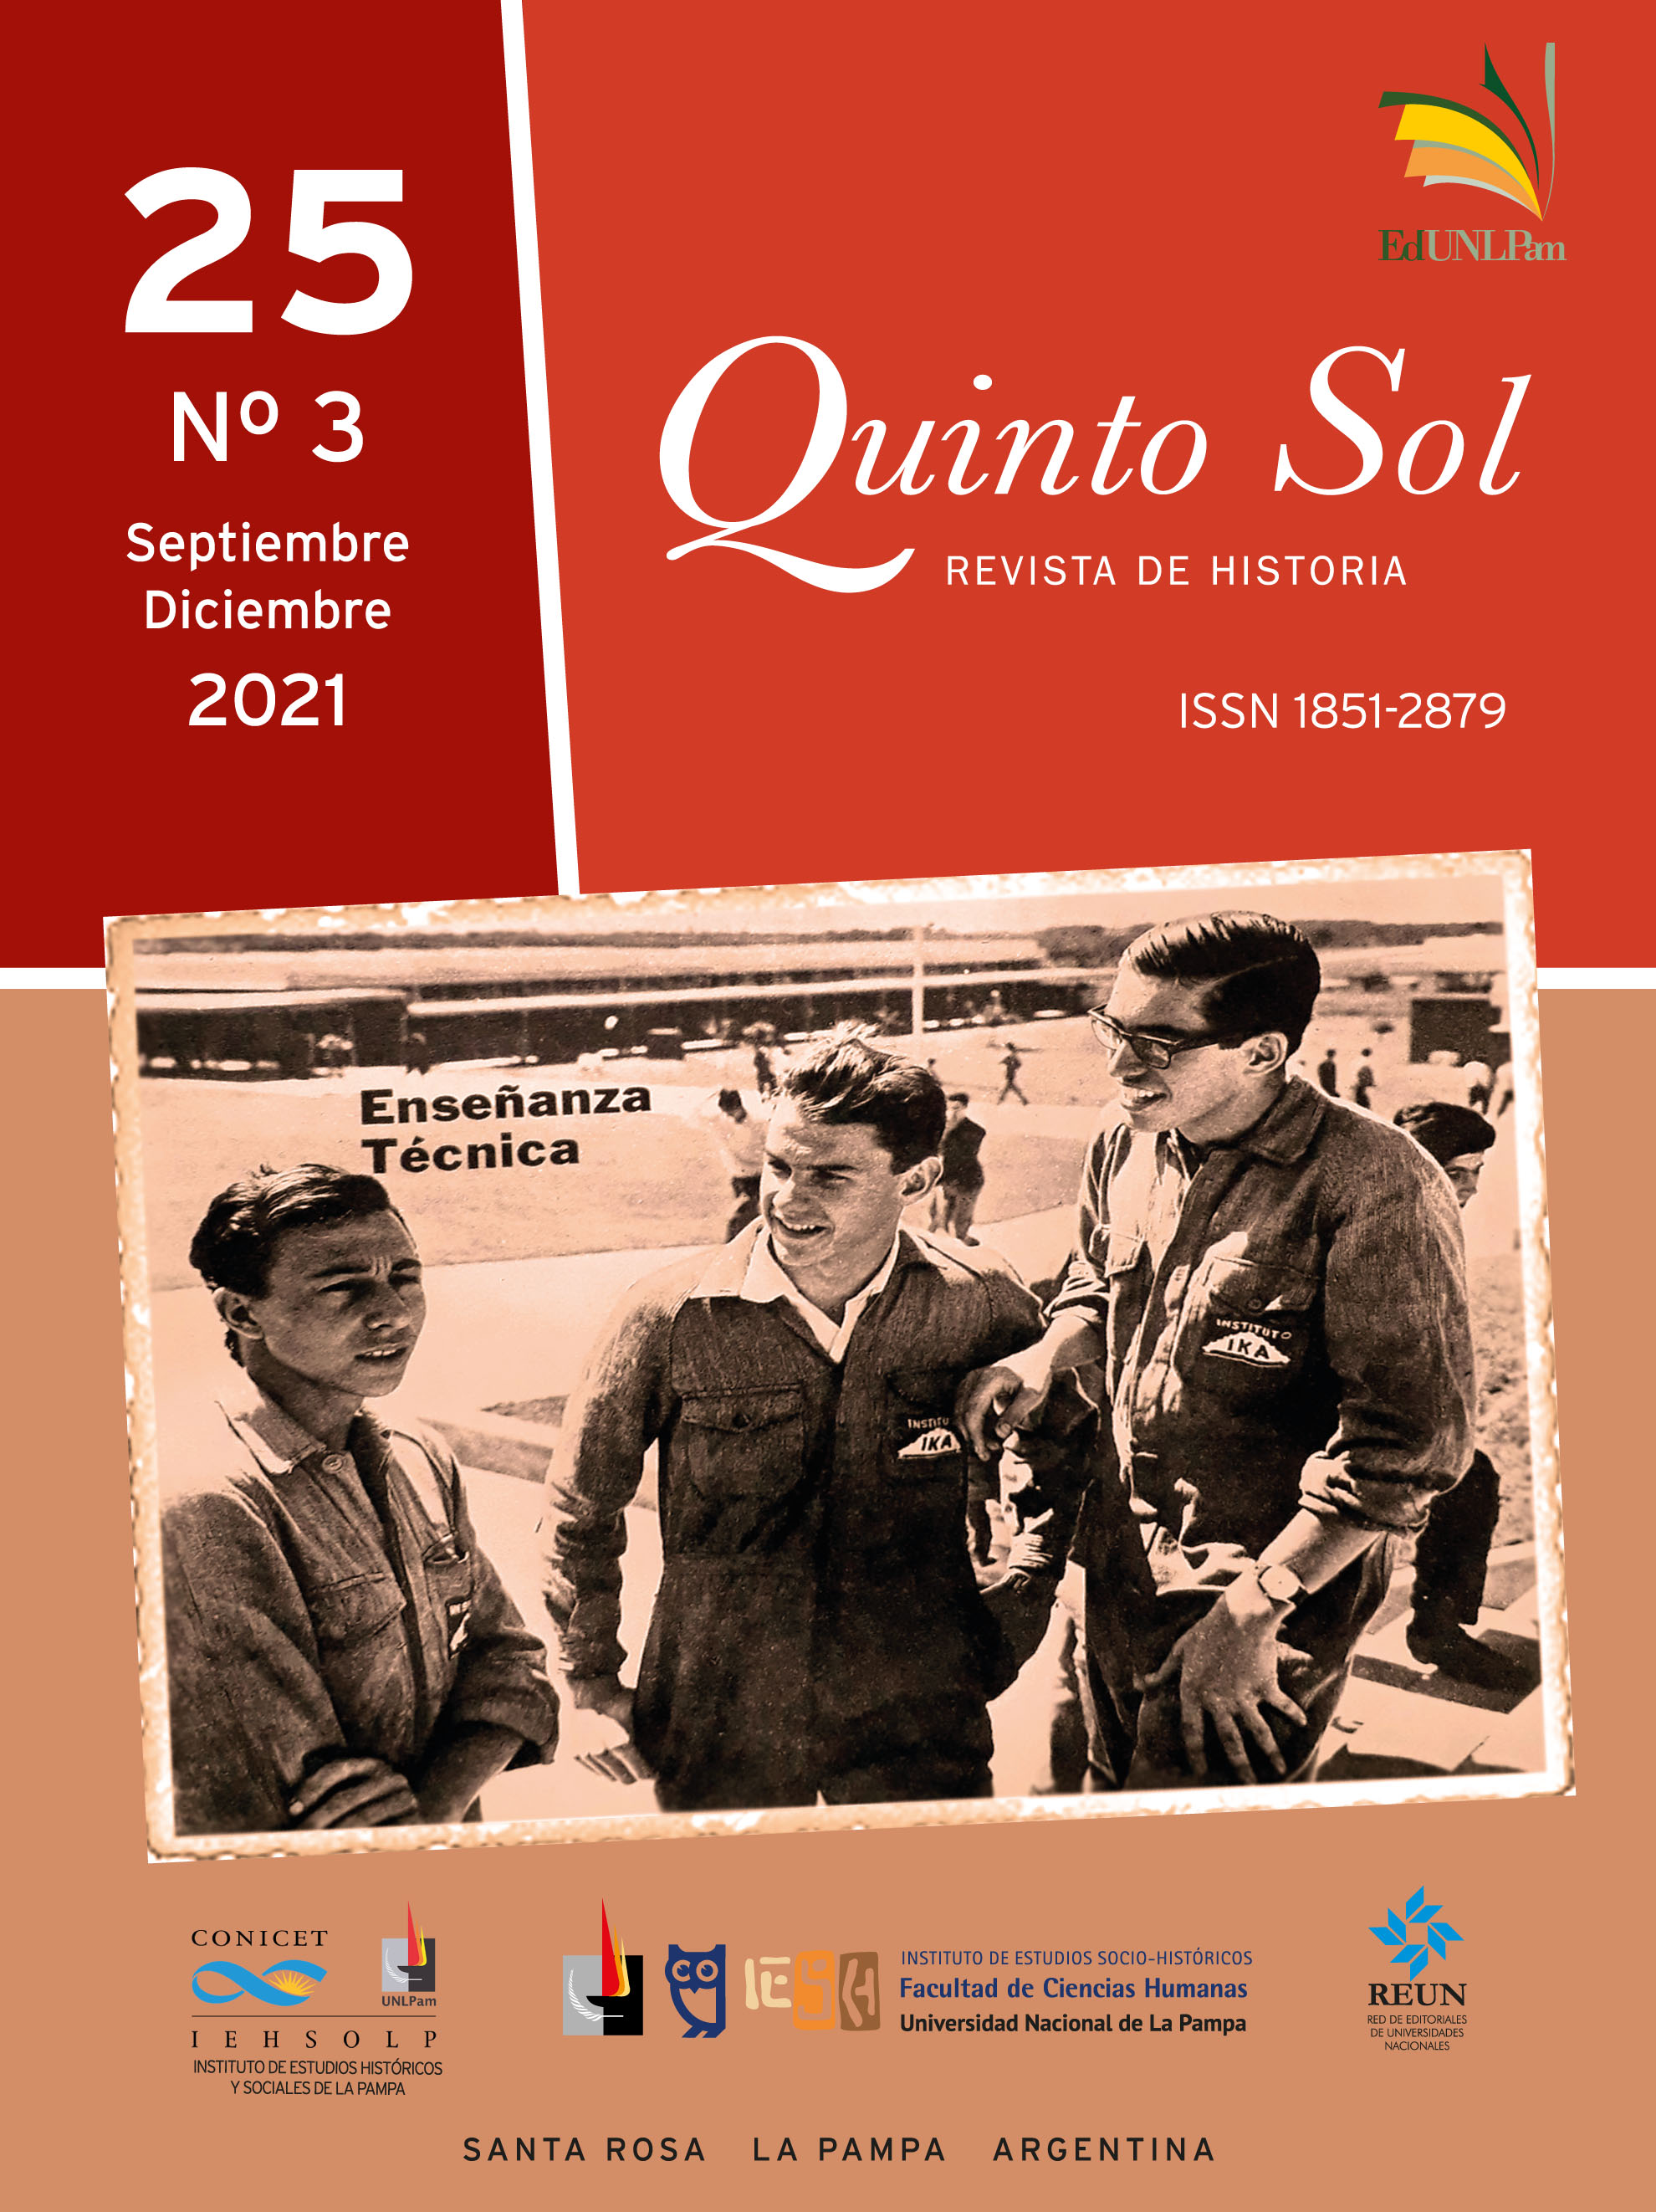 Fotografía de tapa: Enseñanza técnica, julio-agosto de 1964, Gacetika 71, p. 33. Biblioteca Mayor de la Universidad Nacional de Córdoba. Gentileza Paula Romani.